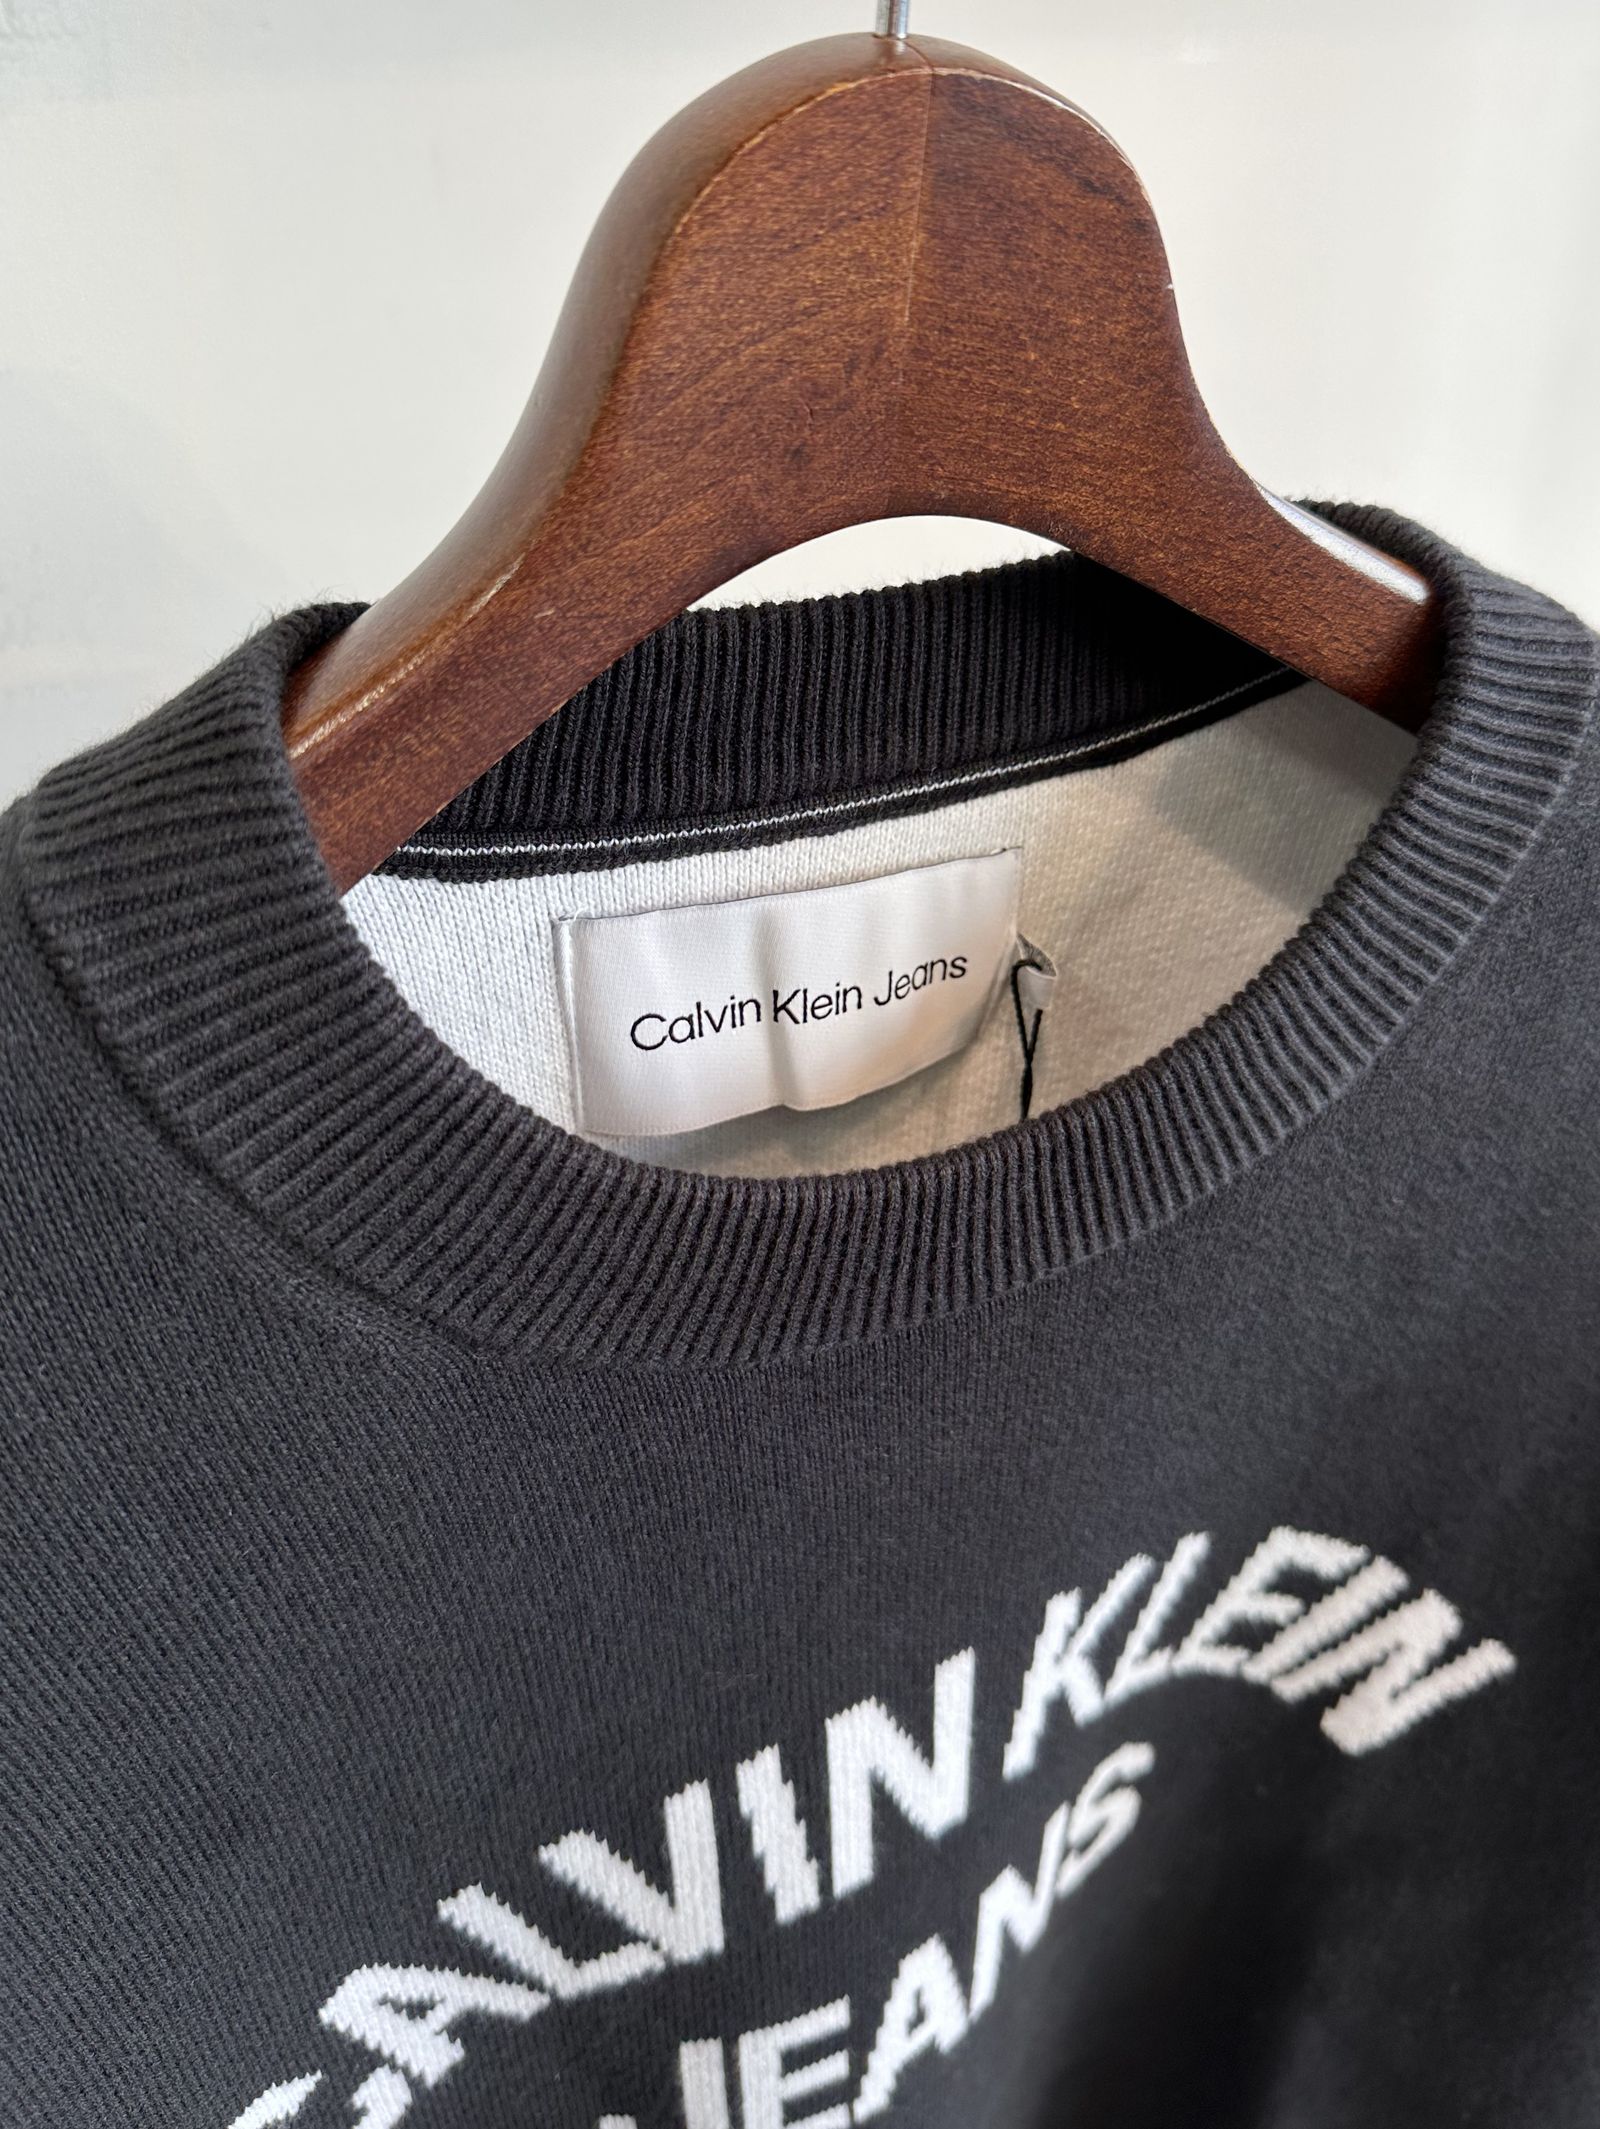 Calvin Klein - バーシティクルーネックセーター / J324493 / ブラック